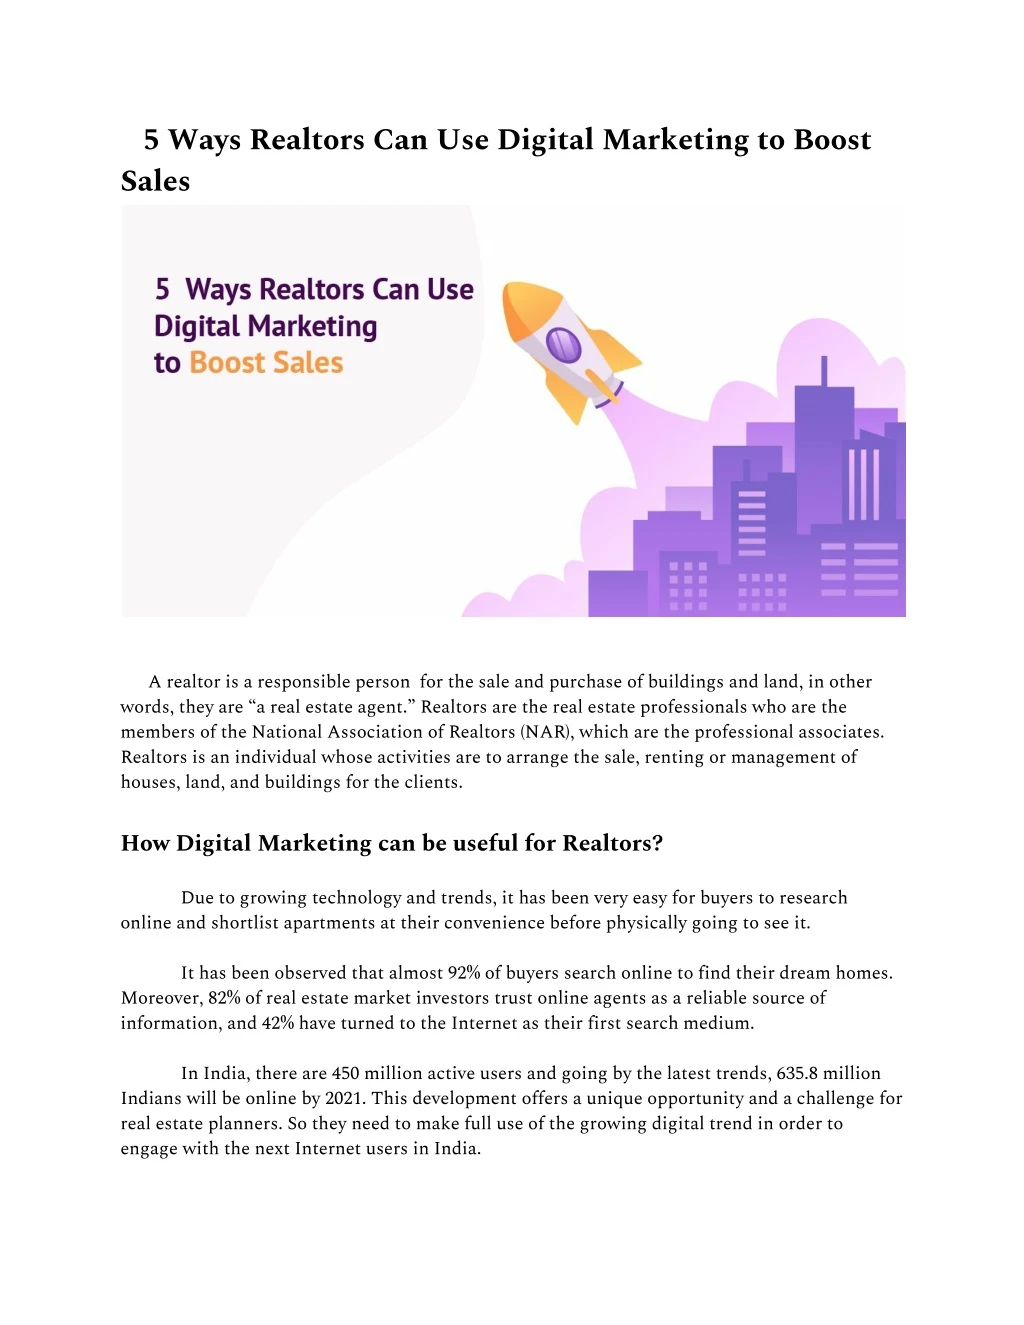 5 ways realtors can use digital marketing